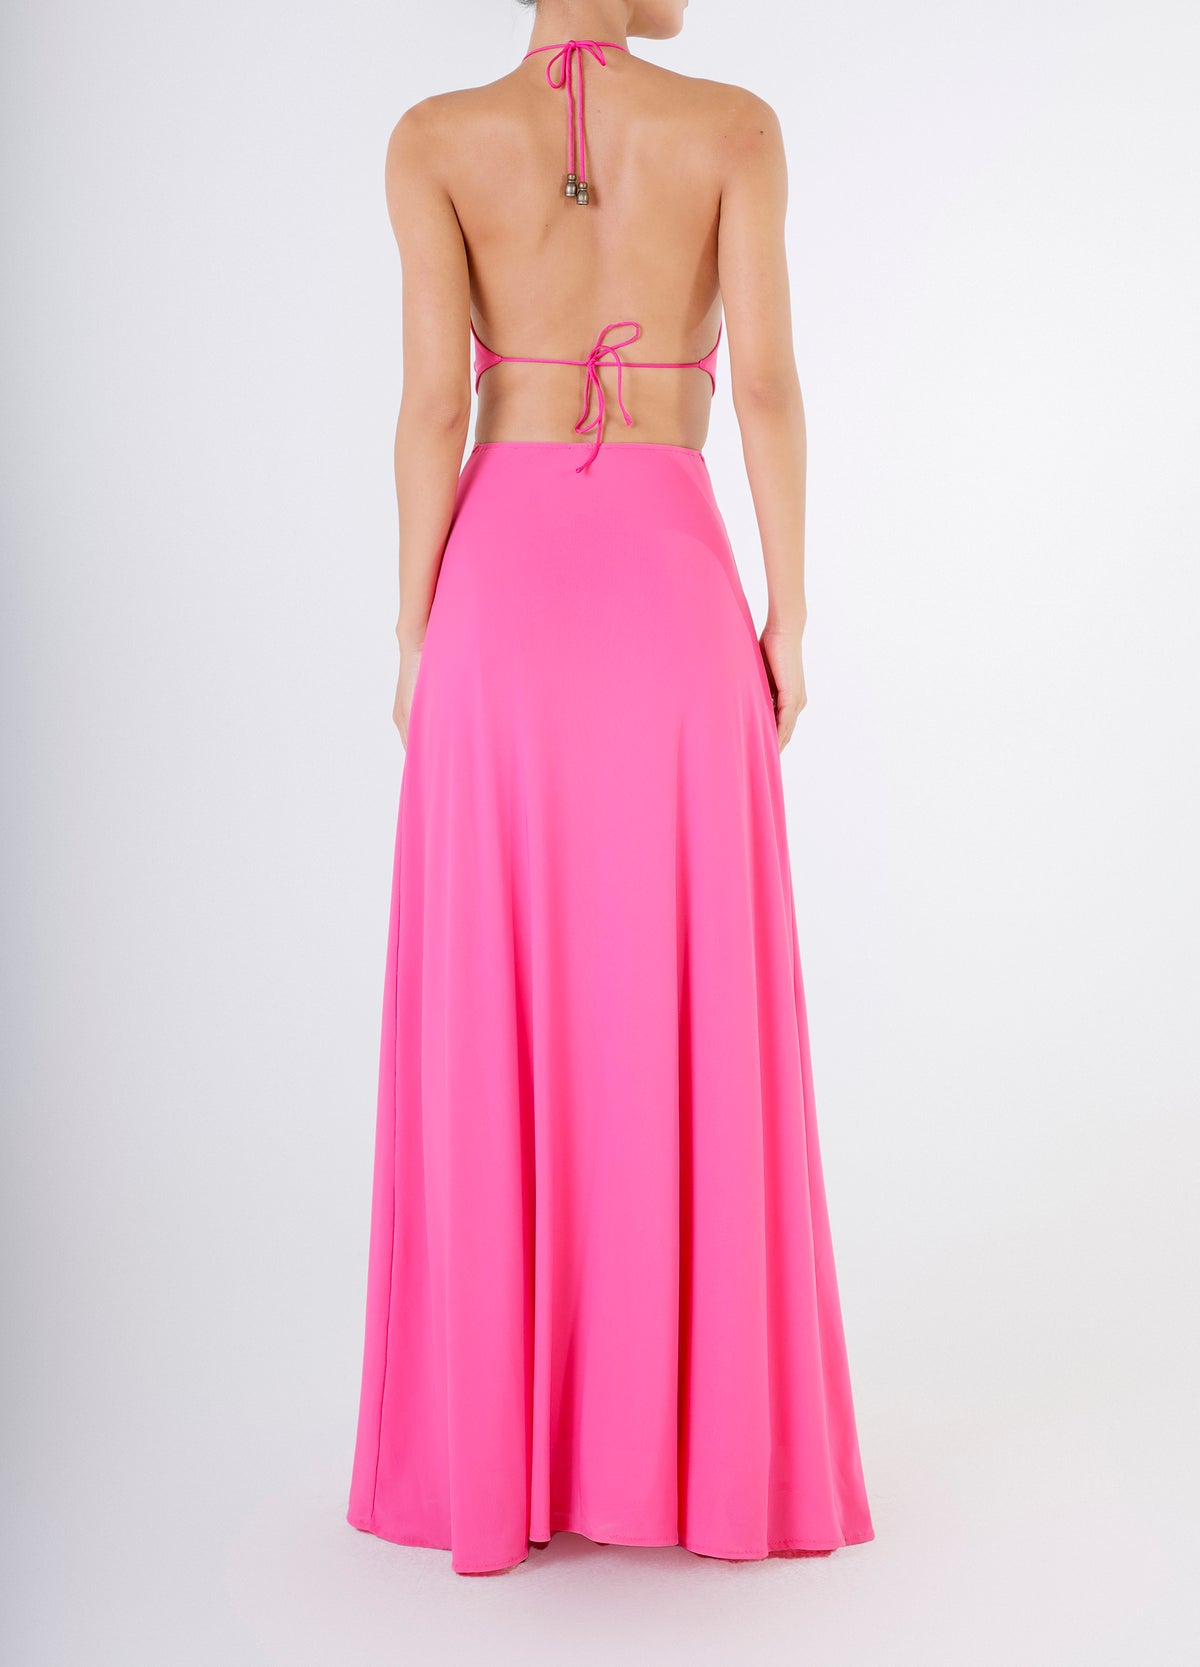 Mackenzie dress - Hot pink